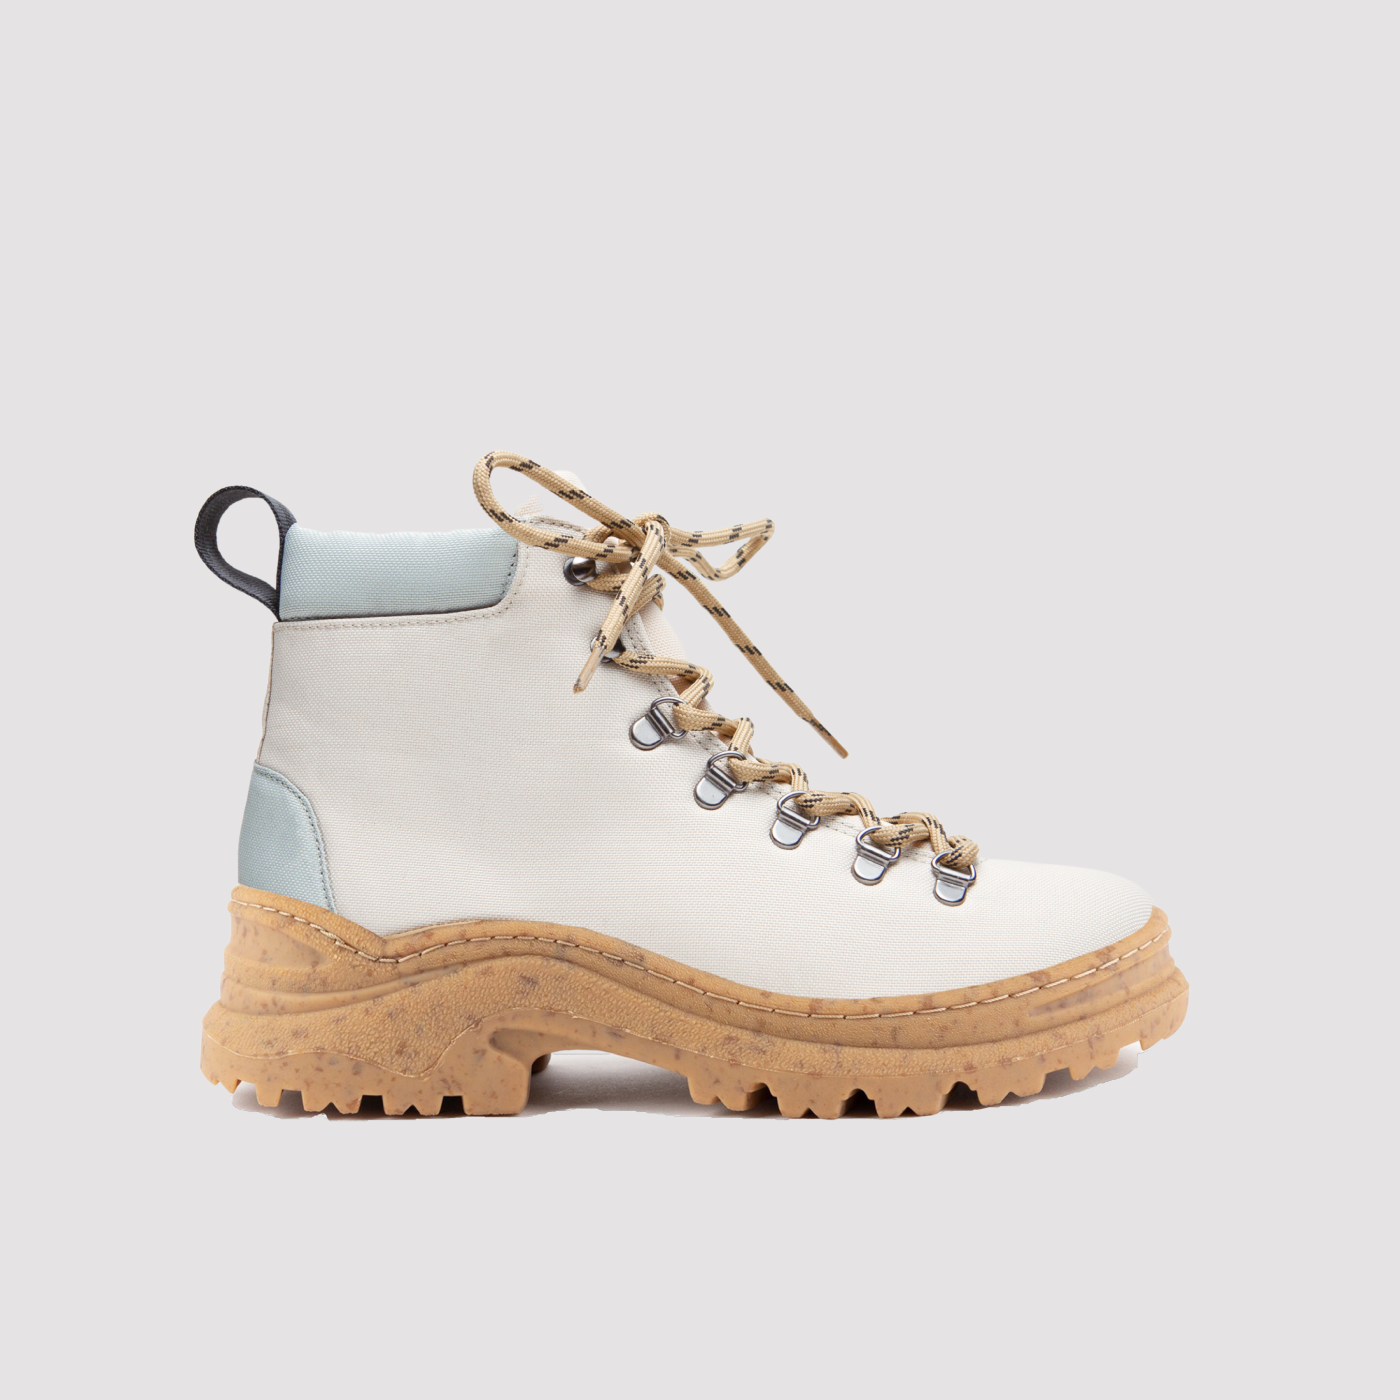 The vegan + sustainable white hiking boot, profile.